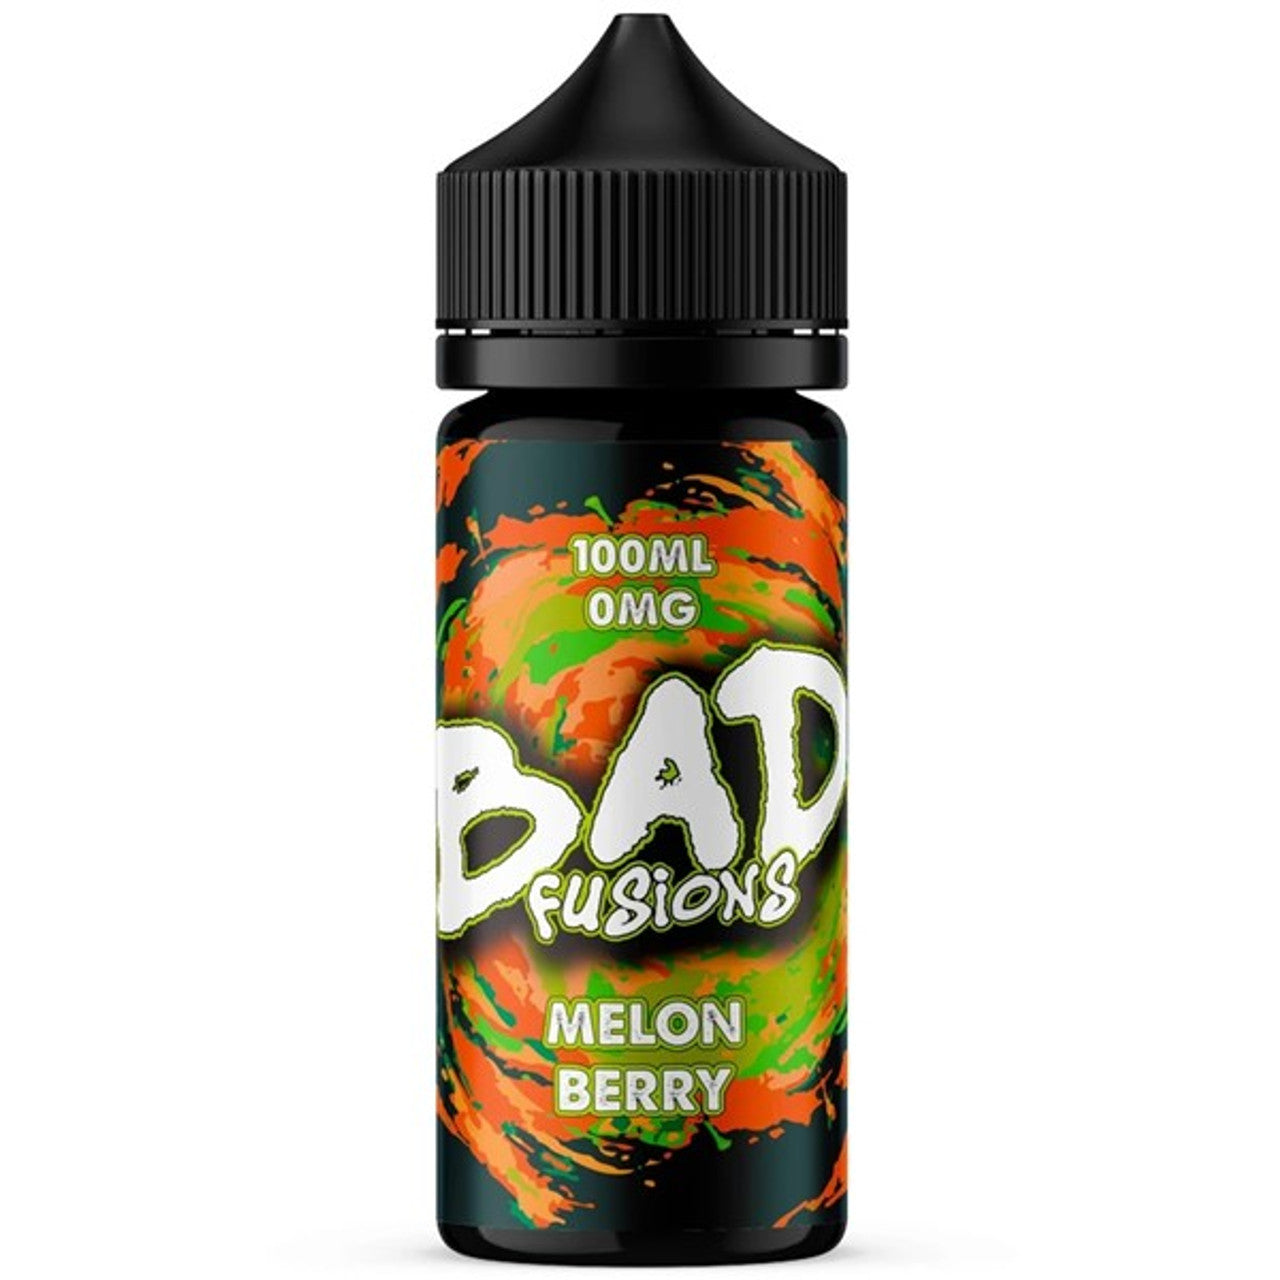 Melon Berry E Liquid 100ml By Bad Juice